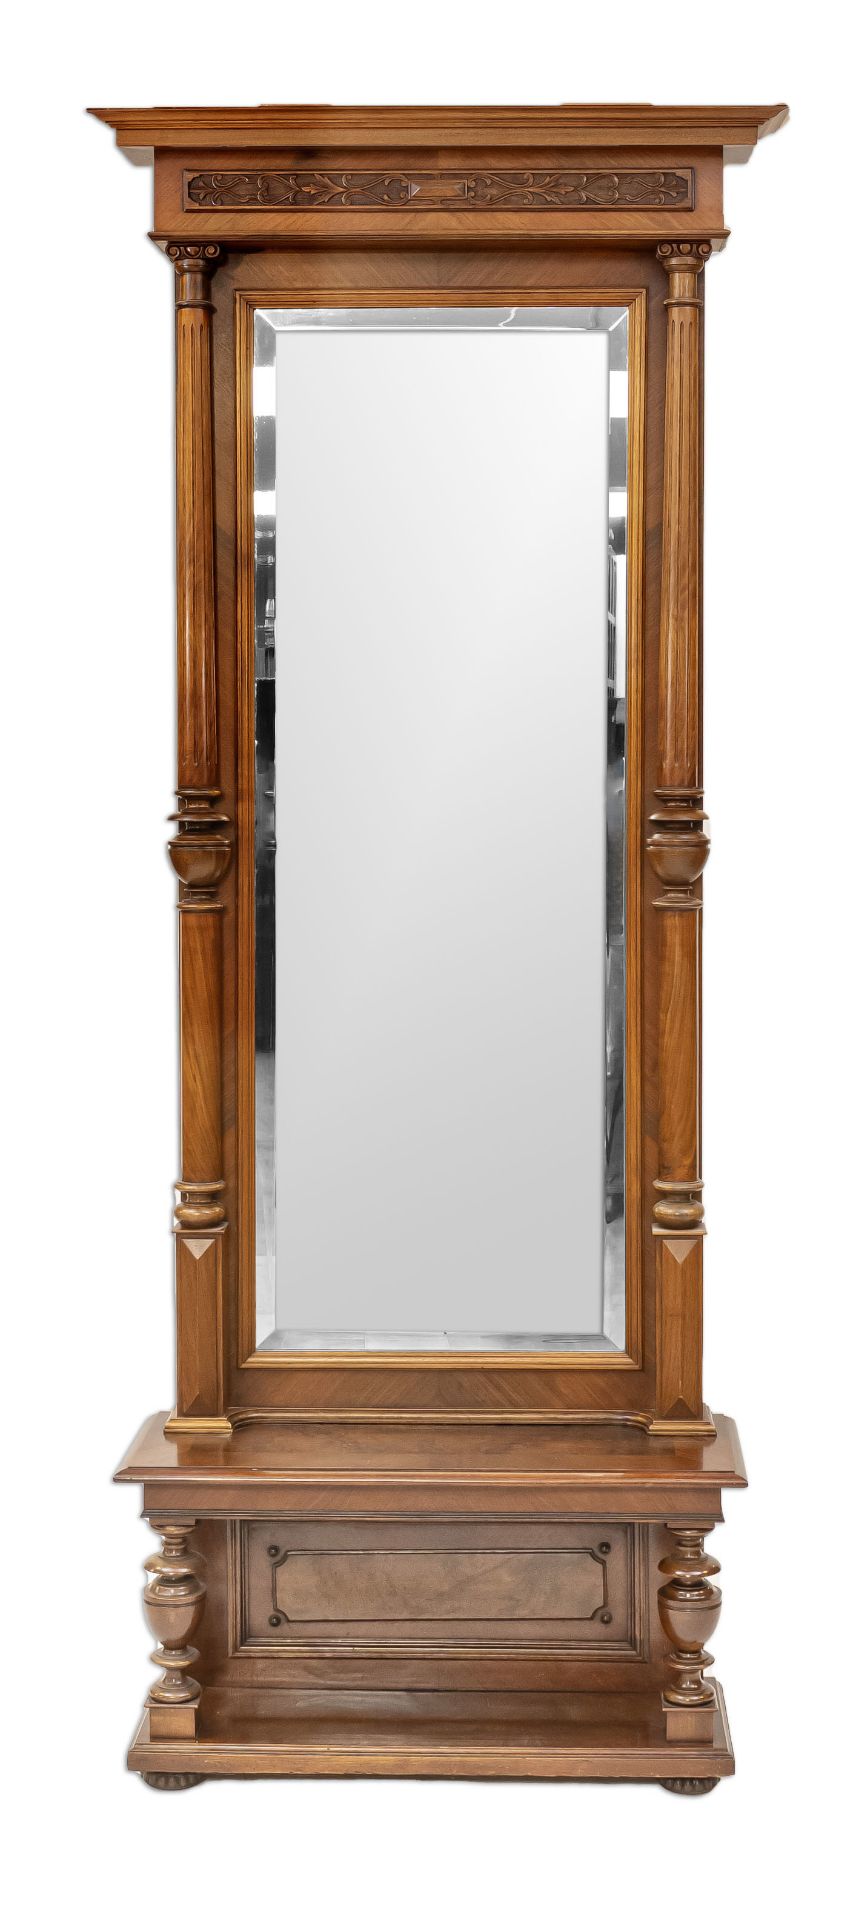 Wilhelminian style mirror with console, around 1880, walnut, 240 x 89 x 32 cm - The furniture cannot